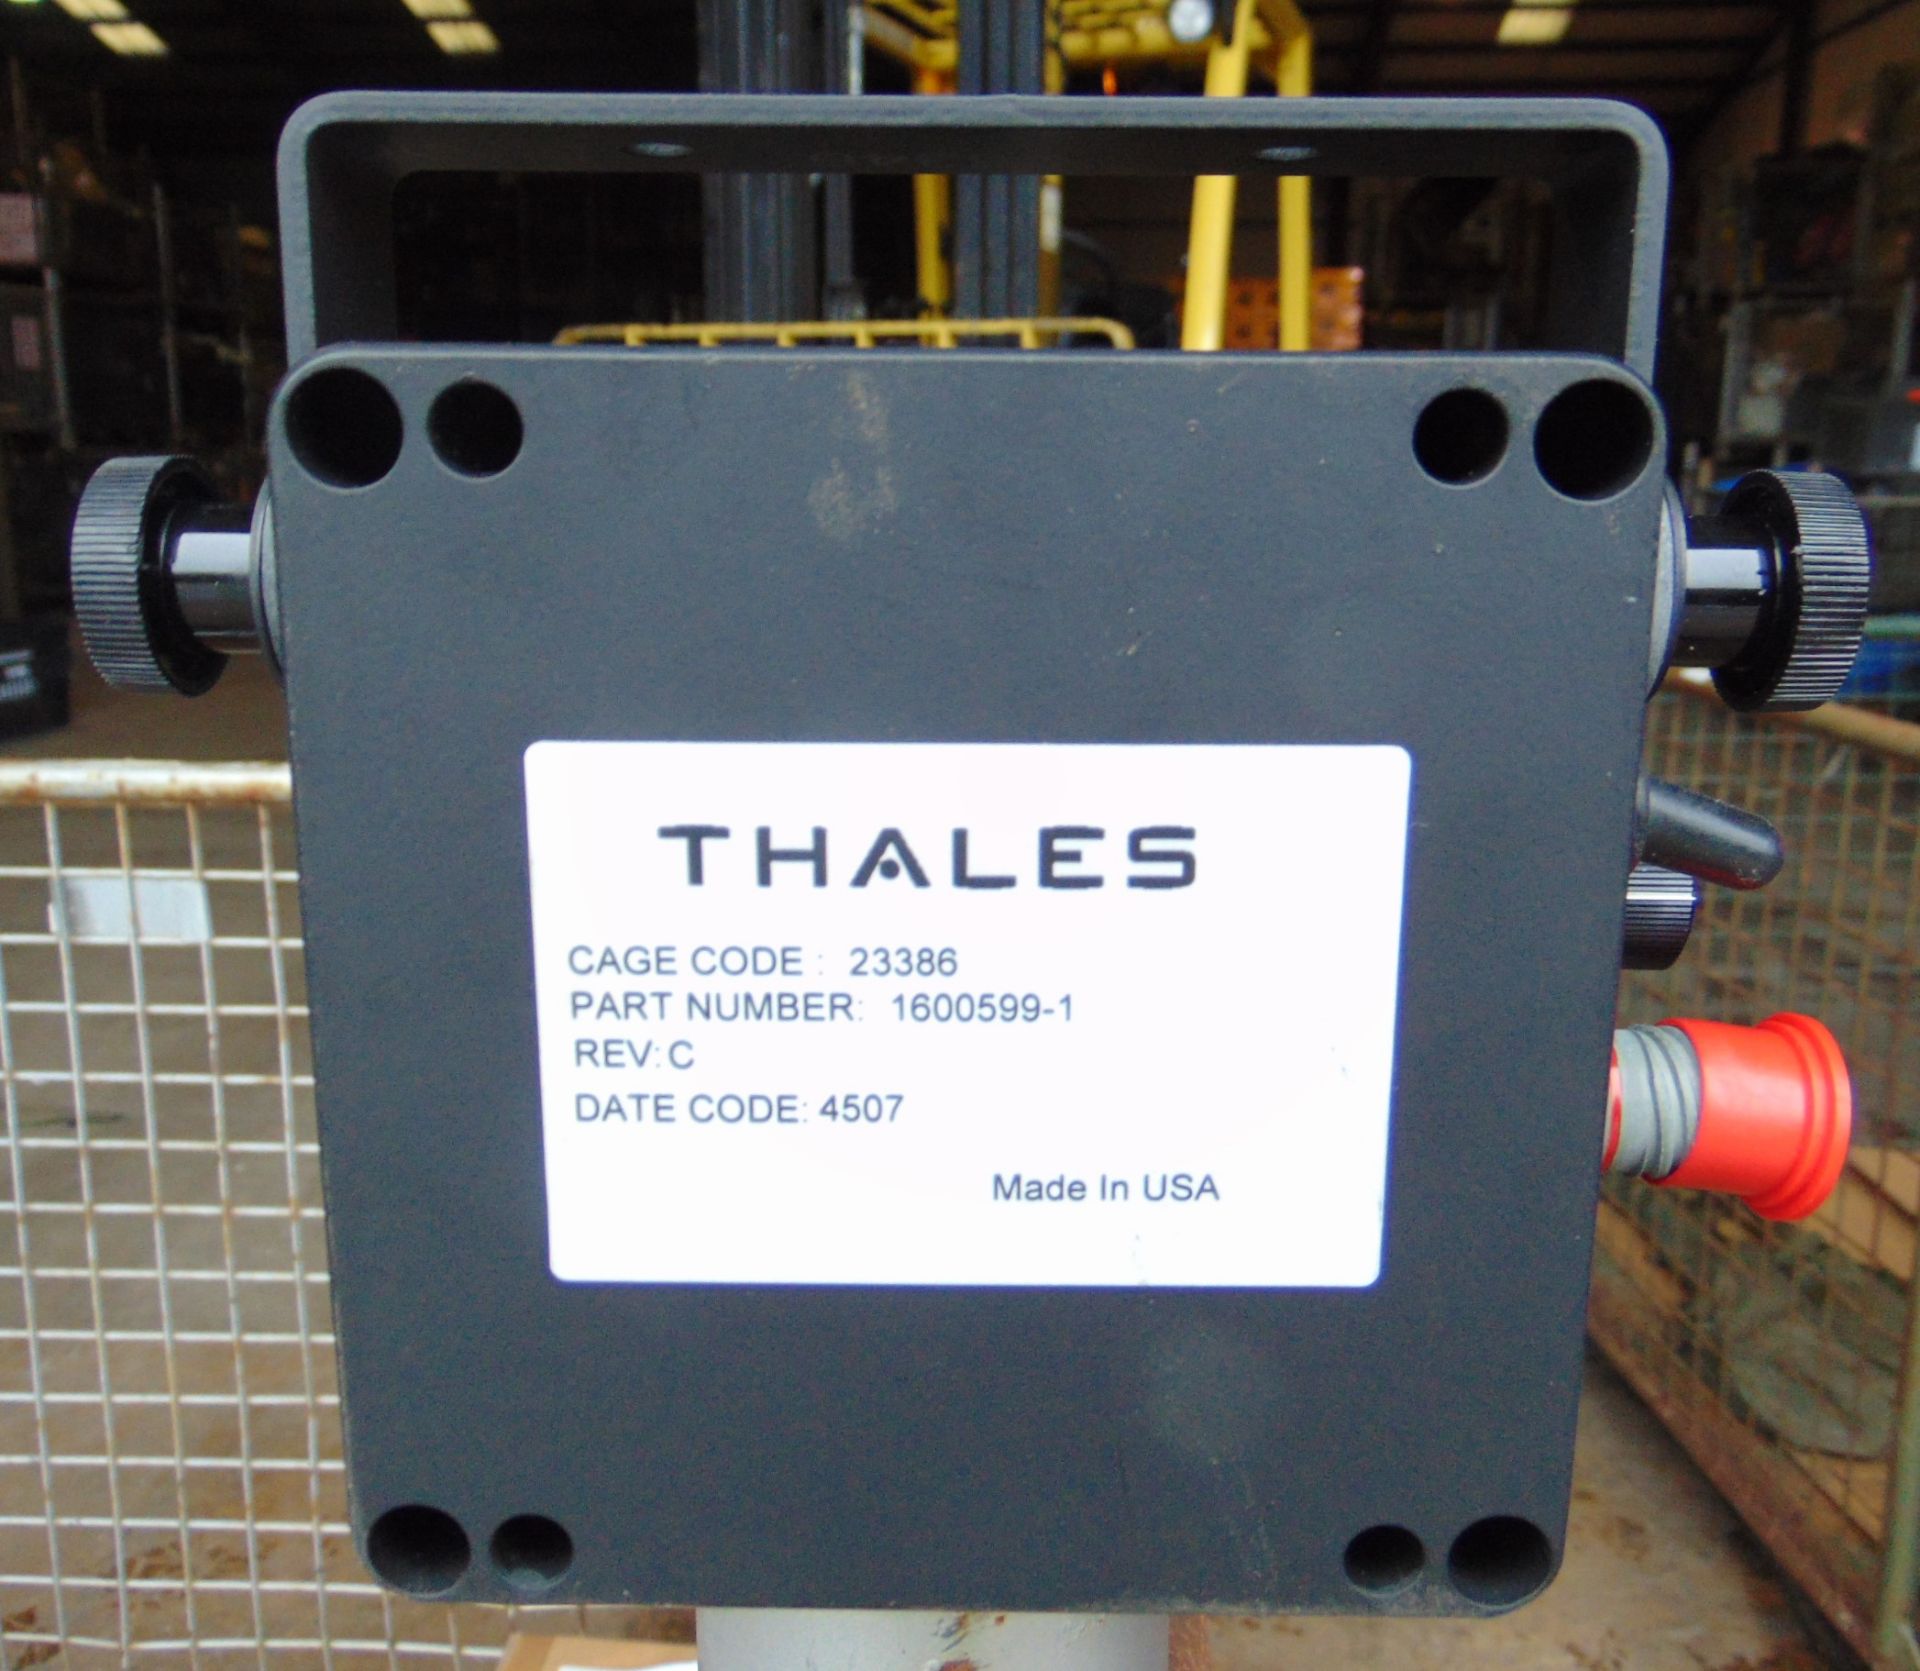 10 x New Unissued Thales loud Speakers Amplifier Units in Original Packaging - Image 5 of 6